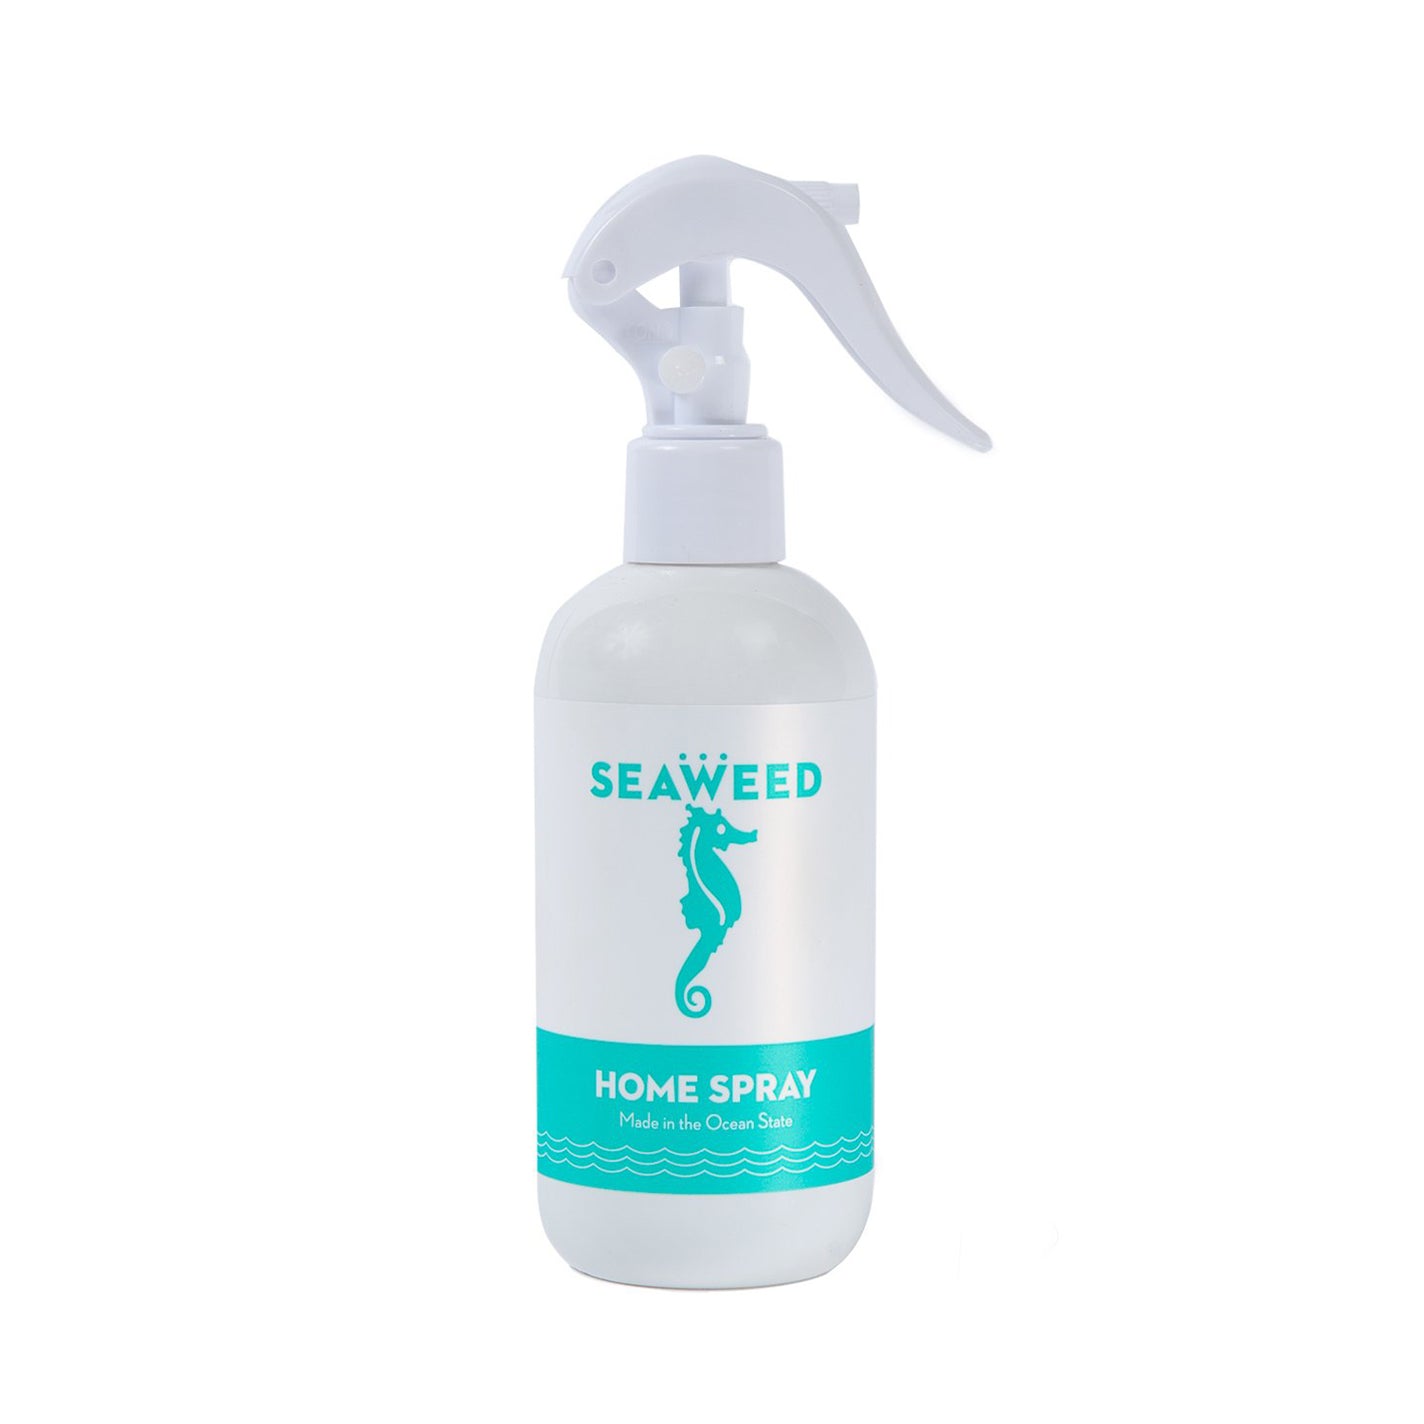 Kalastyle Seaweed Home Spray